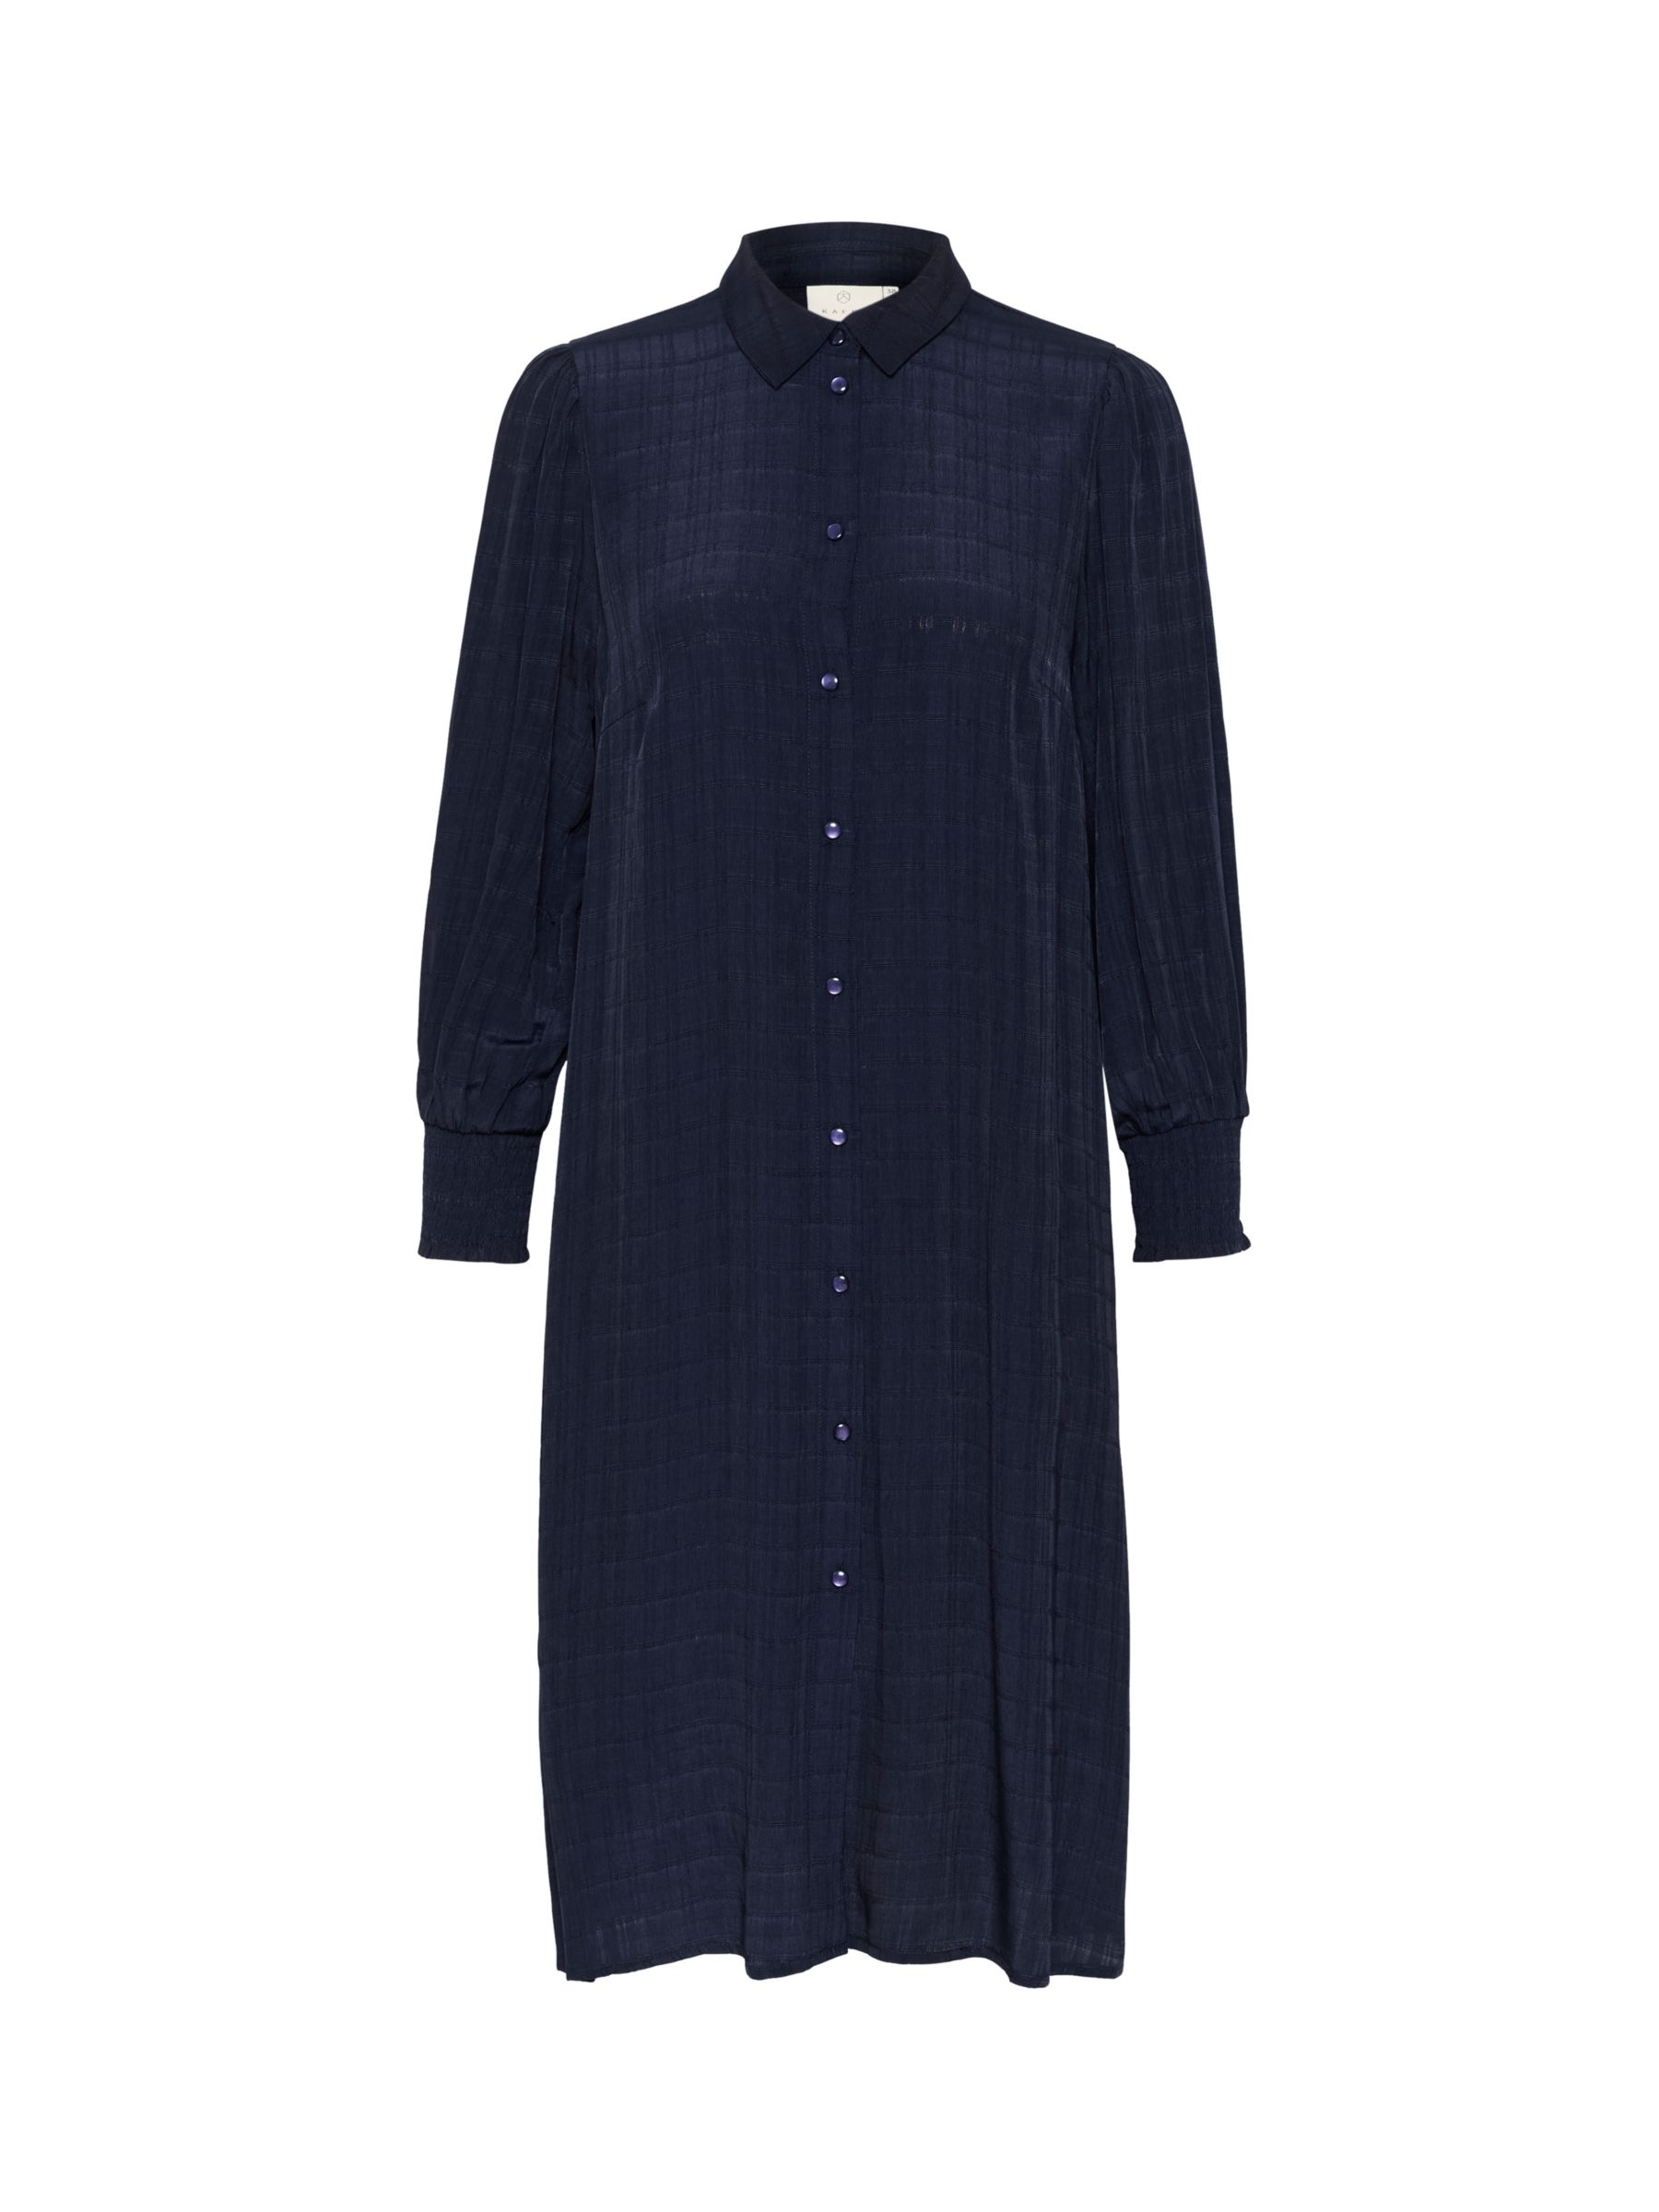 KAFFE Lissa Textured Shirt Dress, Midnight Marine at John Lewis & Partners